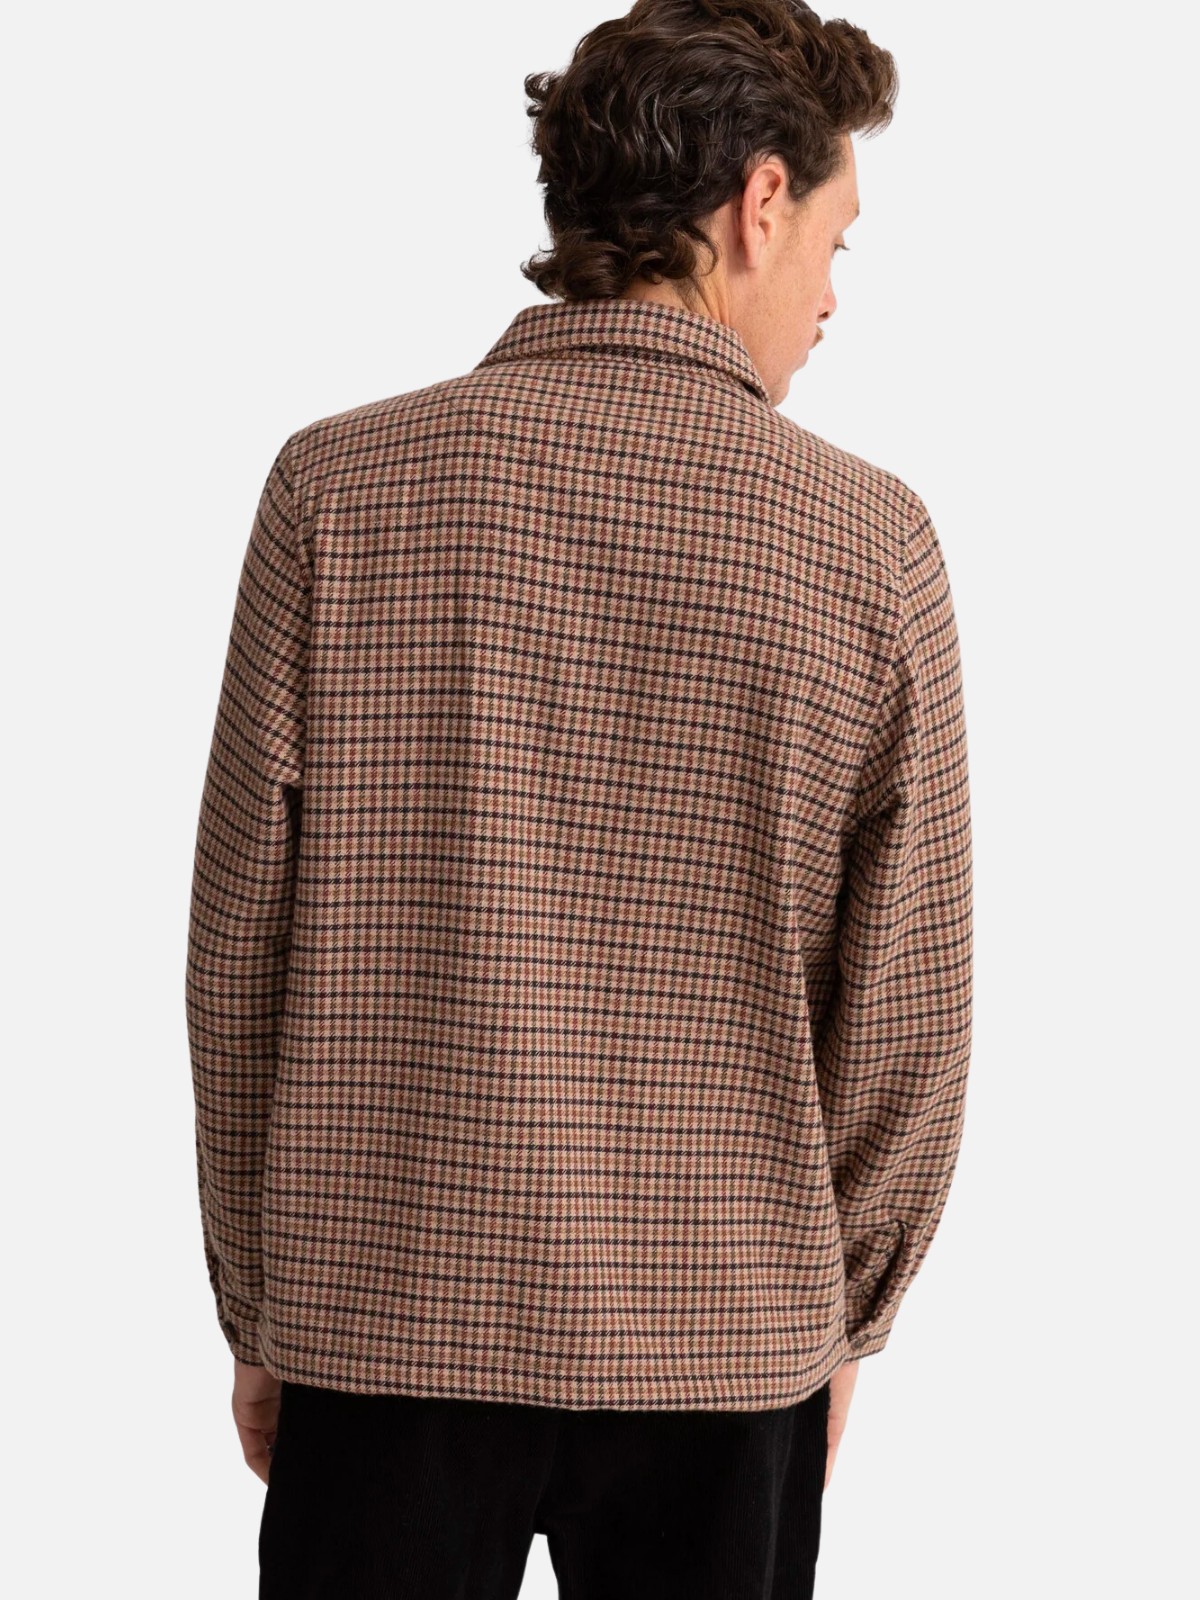 rhythm check overshirt wool blend polyester flannel dawn orange red tan brown black plaid pattern workwear shirt kempt athens ga georgia men's clothing storev